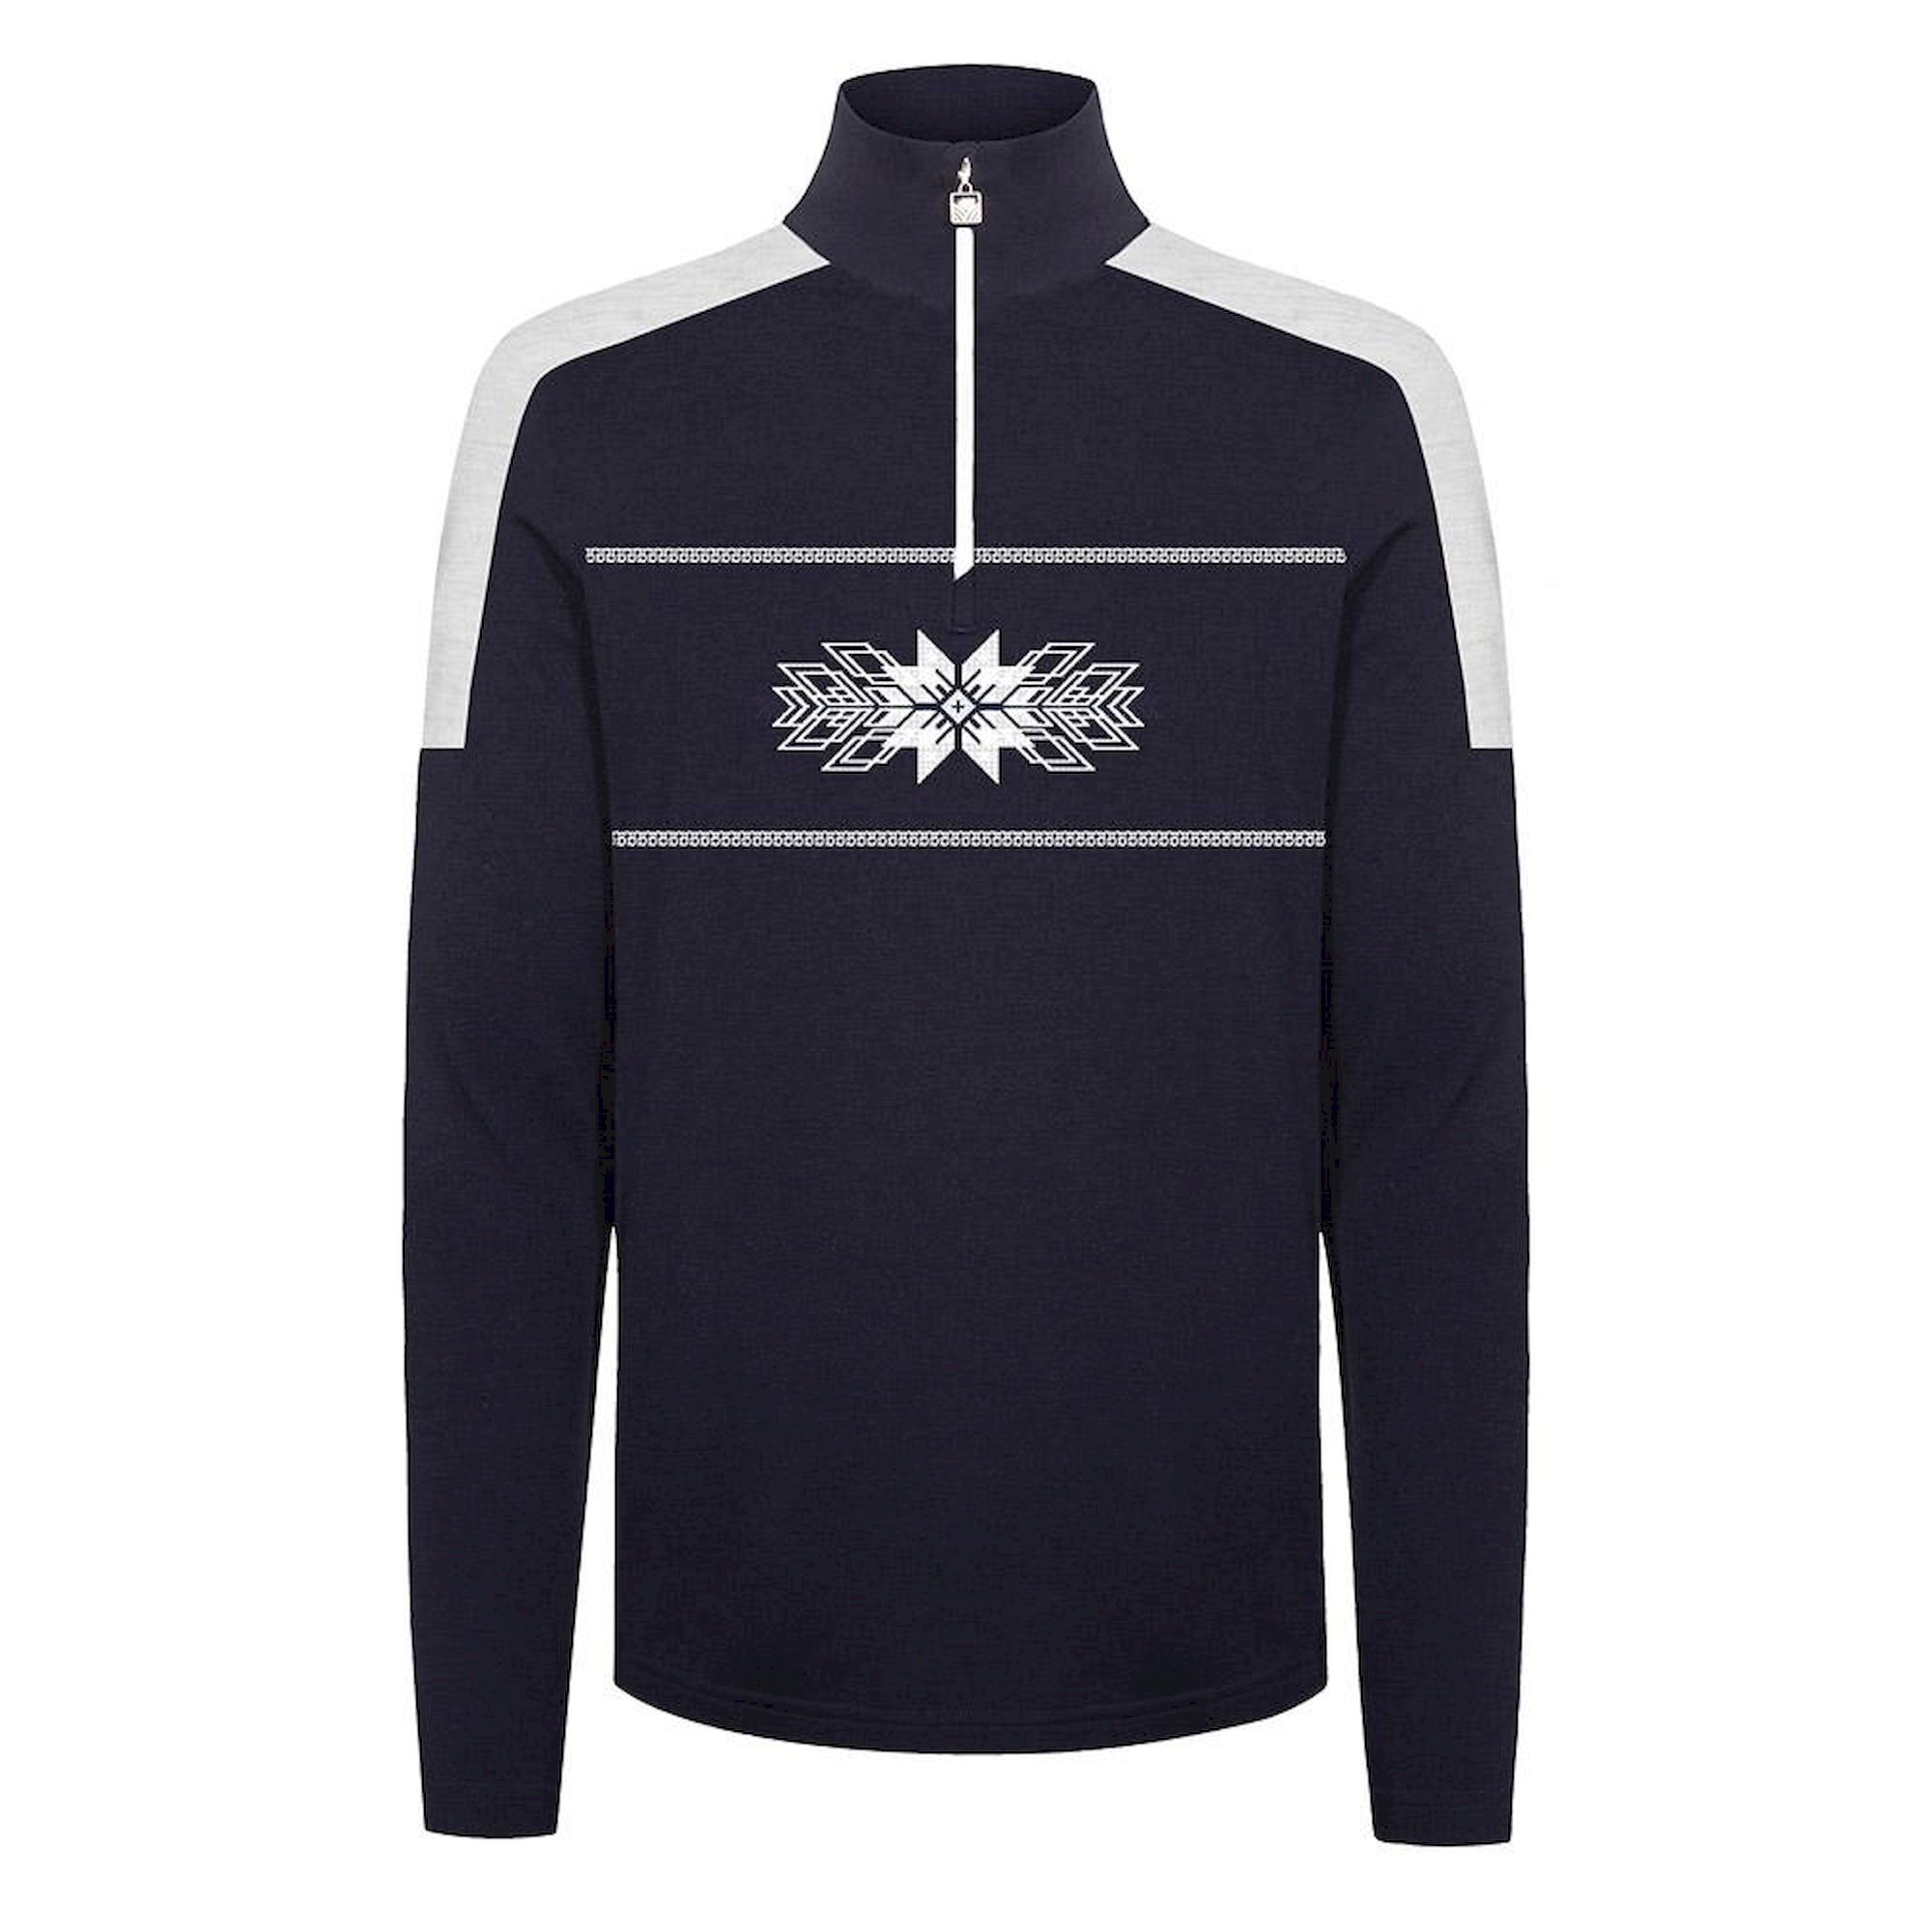 Dale of Norway OL Spirit Basic Sweater - Pullover in lana merino - Uomo | Hardloop